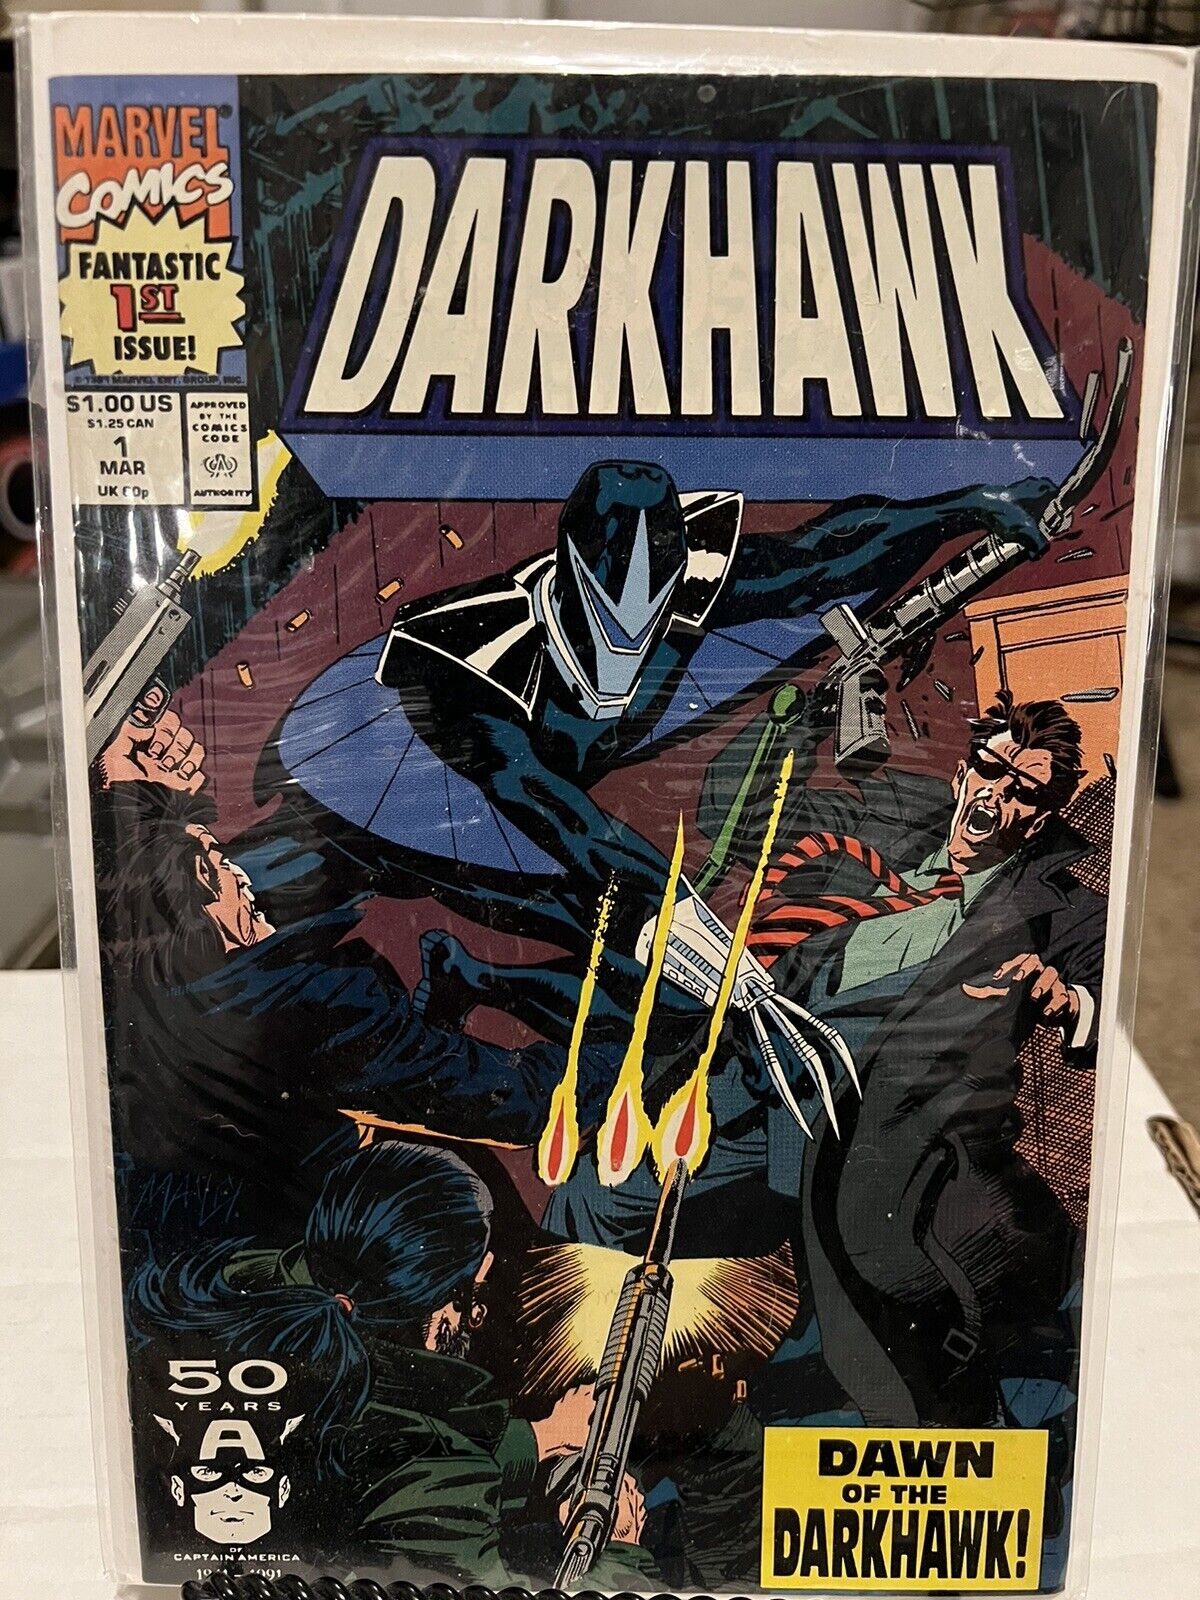 Darkhawk #1 (Marvel Comics March 1991)